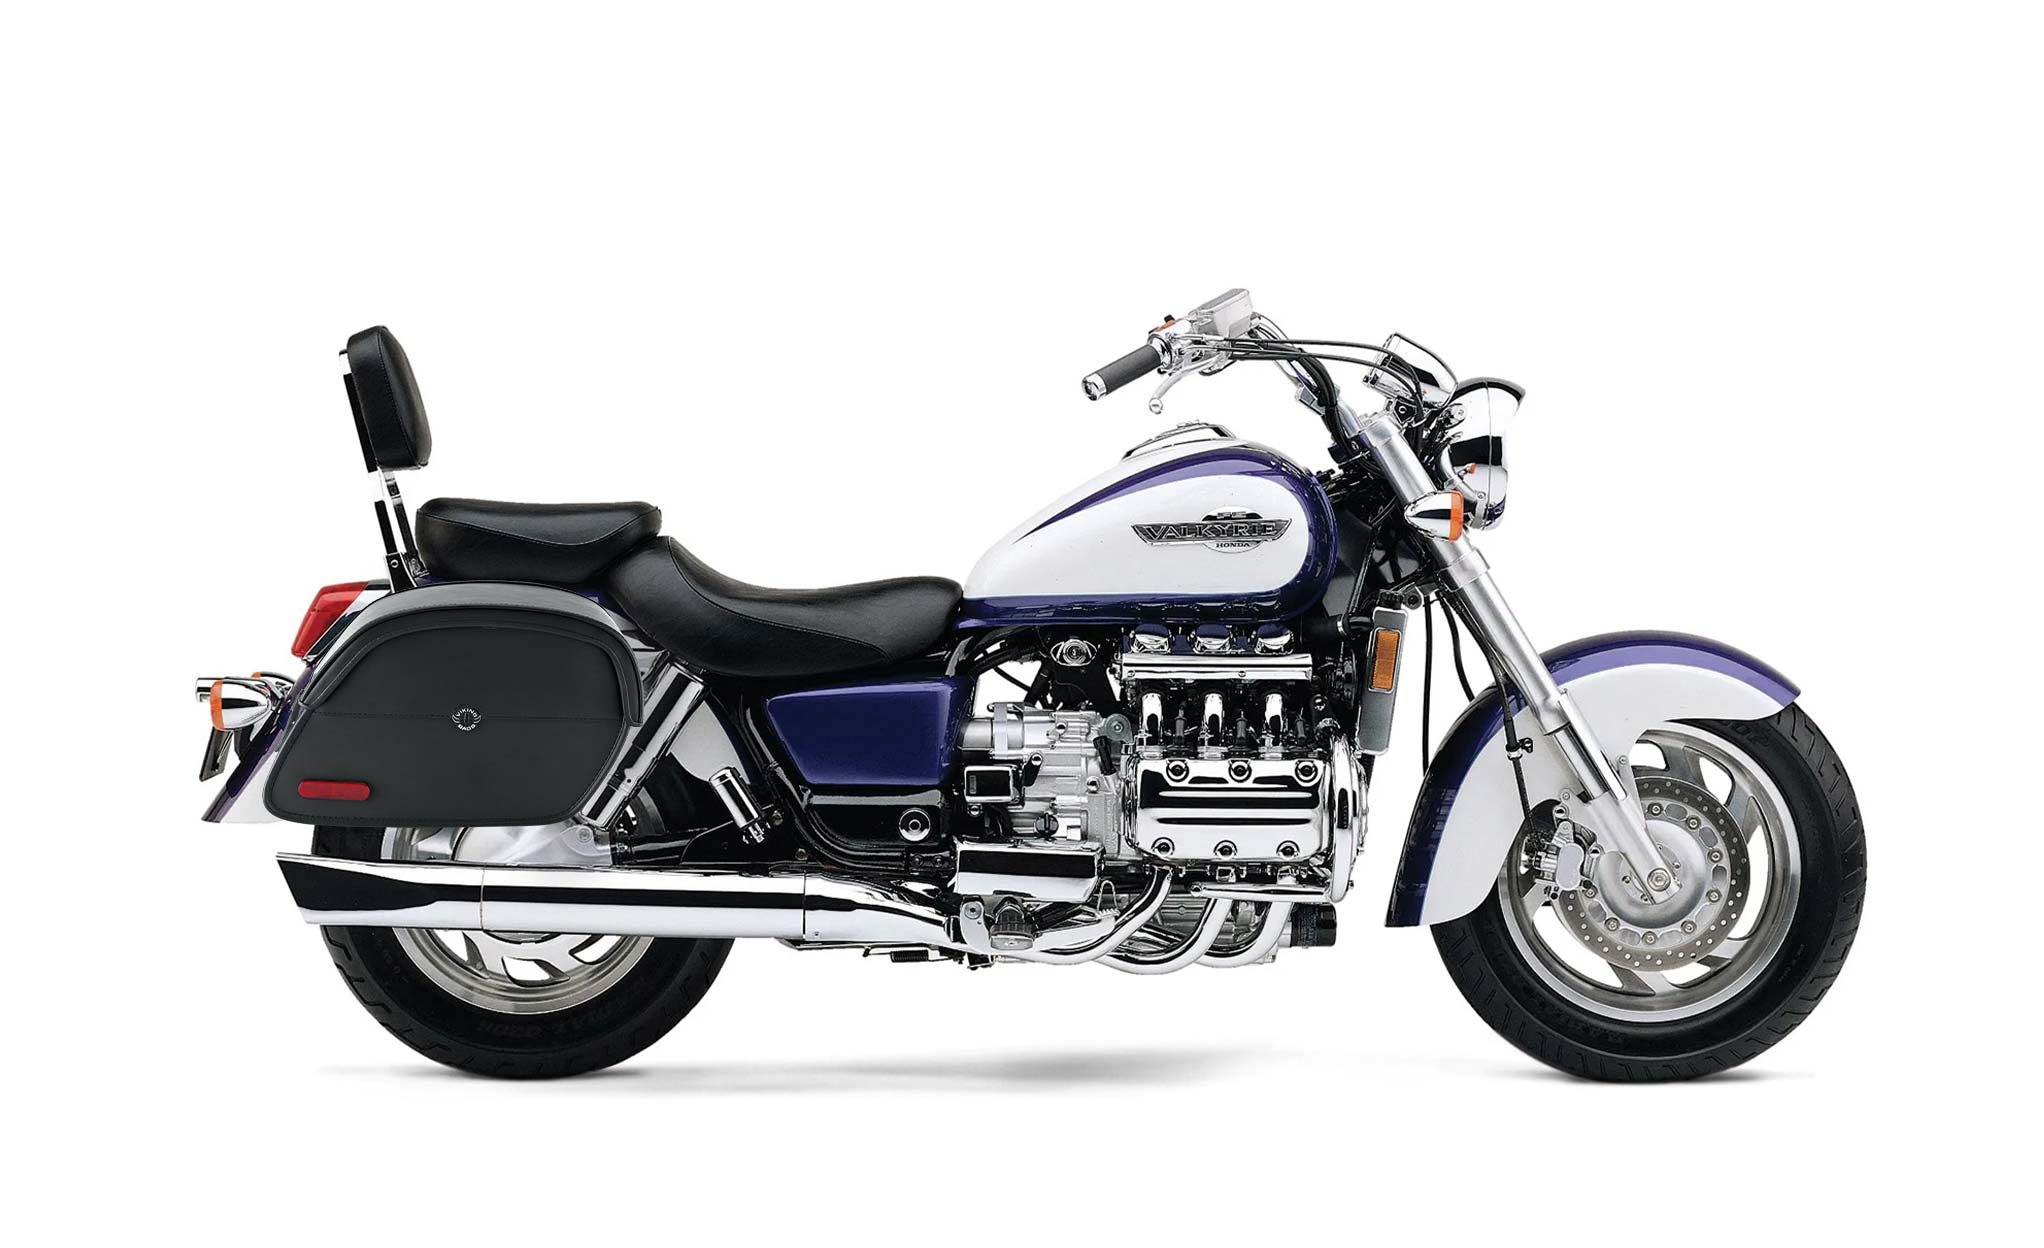 Viking California Large Honda 1500 Valkyrie Interstate Leather Motorcycle Saddlebags on Bike Photo @expand